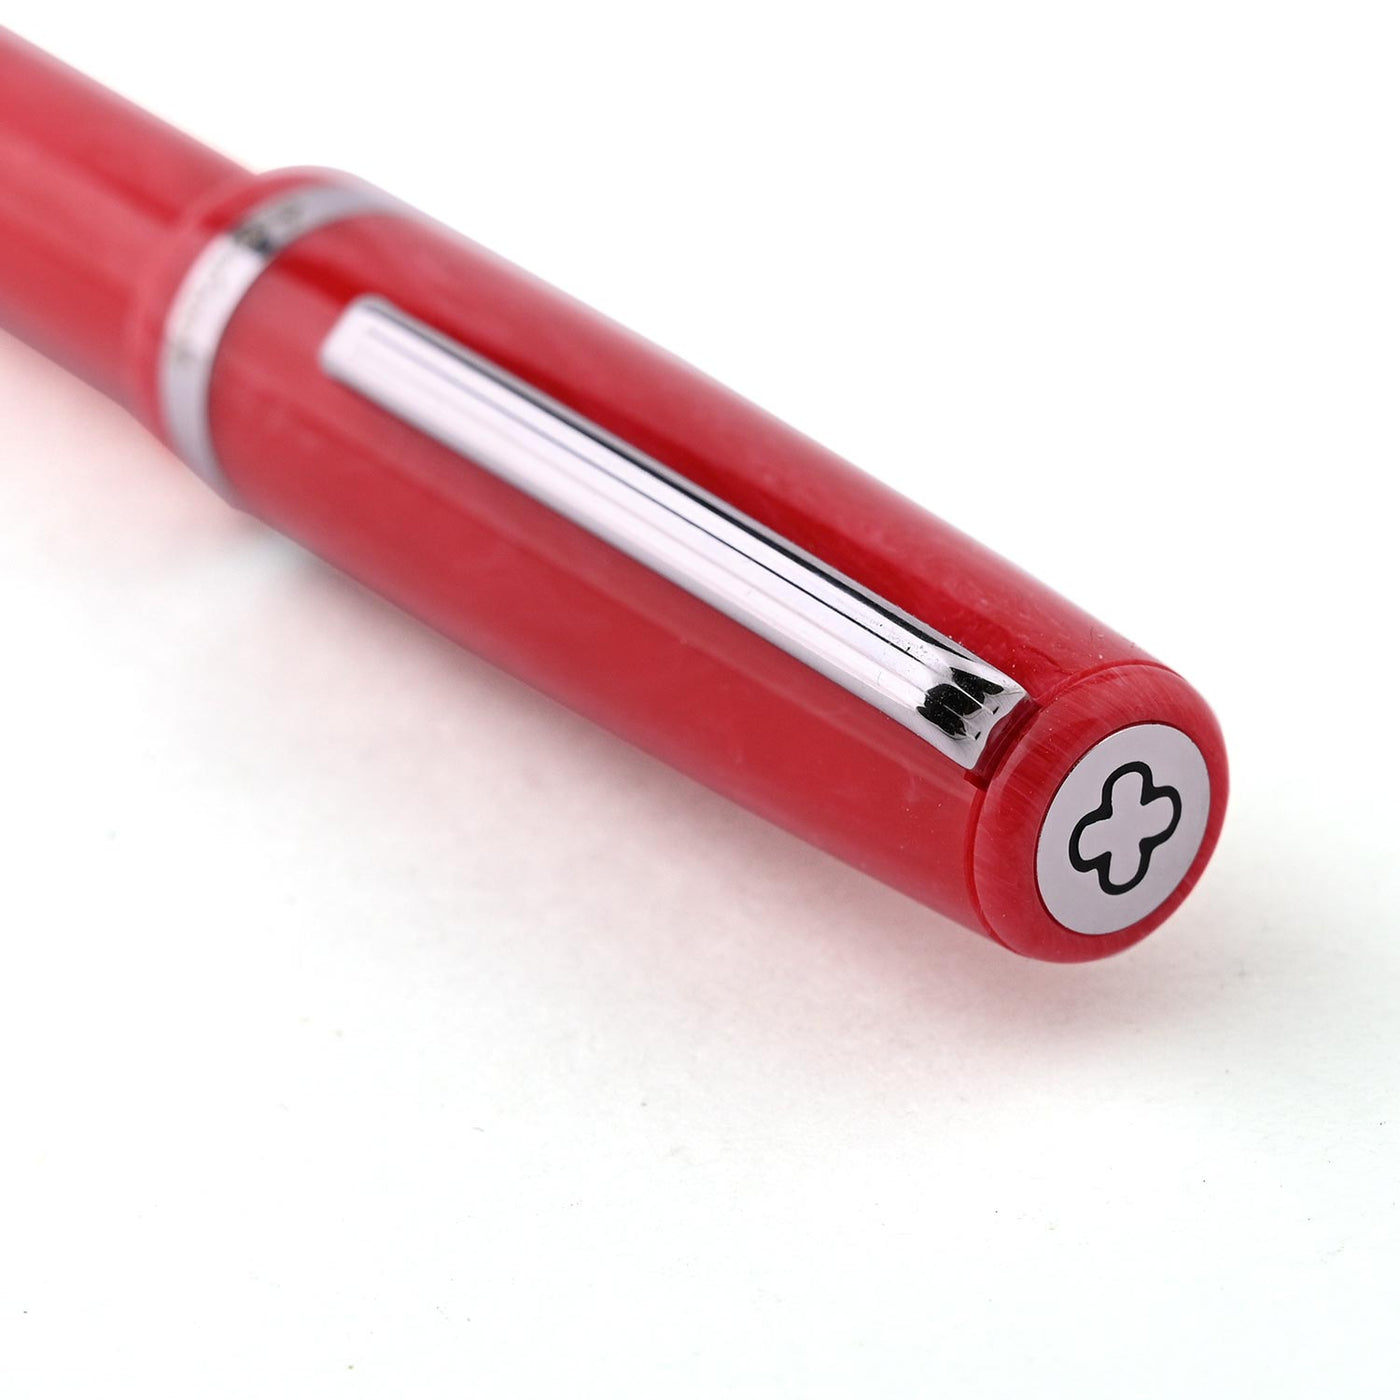 Esterbrook JR Pocket Fountain Pen - Carmin Red CT 5